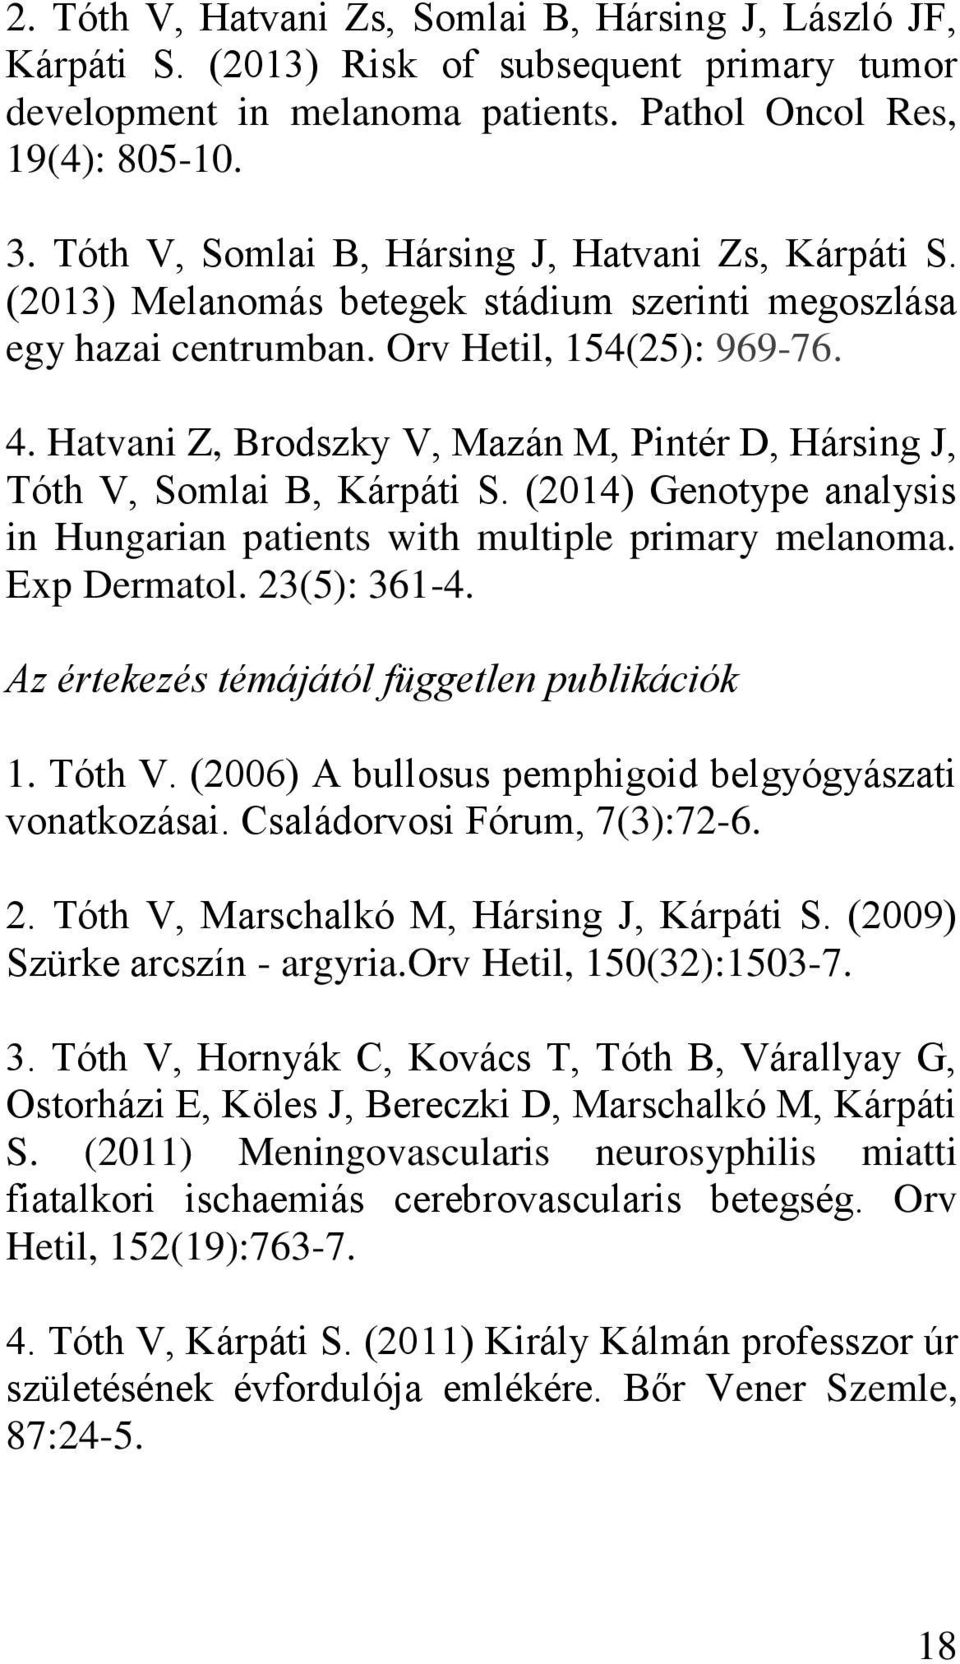 Hatvani Z, Brodszky V, Mazán M, Pintér D, Hársing J, Tóth V, Somlai B, Kárpáti S. (2014) Genotype analysis in Hungarian patients with multiple primary melanoma. Exp Dermatol. 23(5): 361-4.